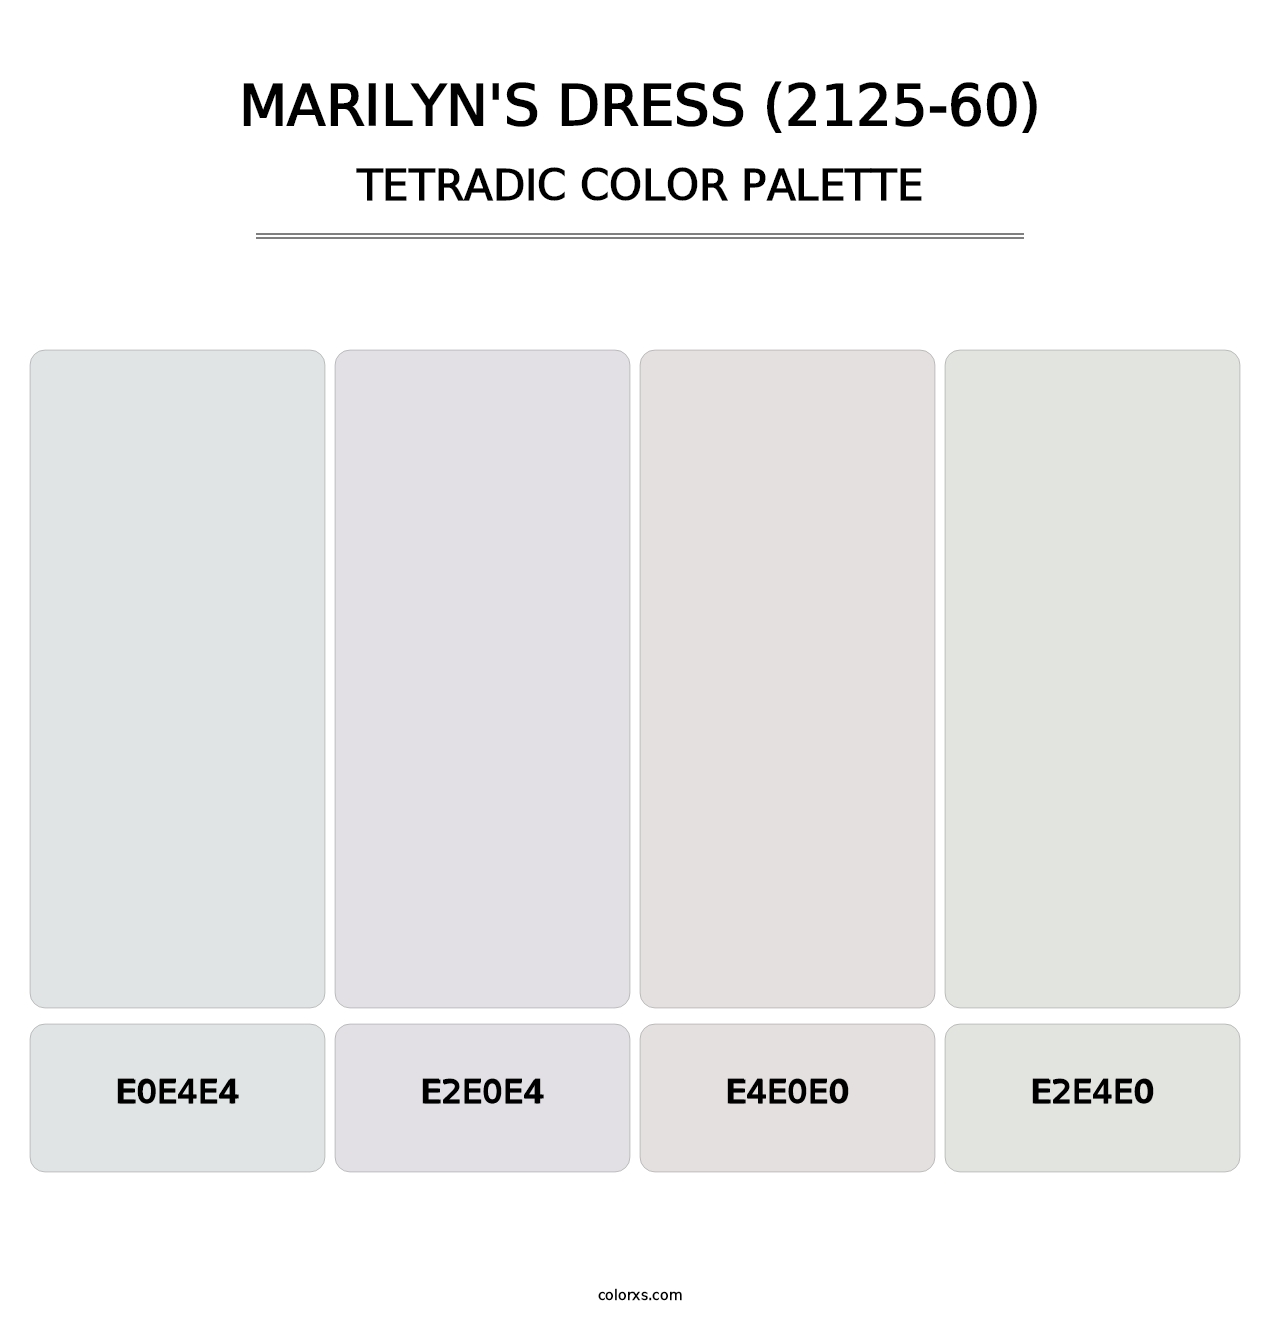 Marilyn's Dress (2125-60) - Tetradic Color Palette